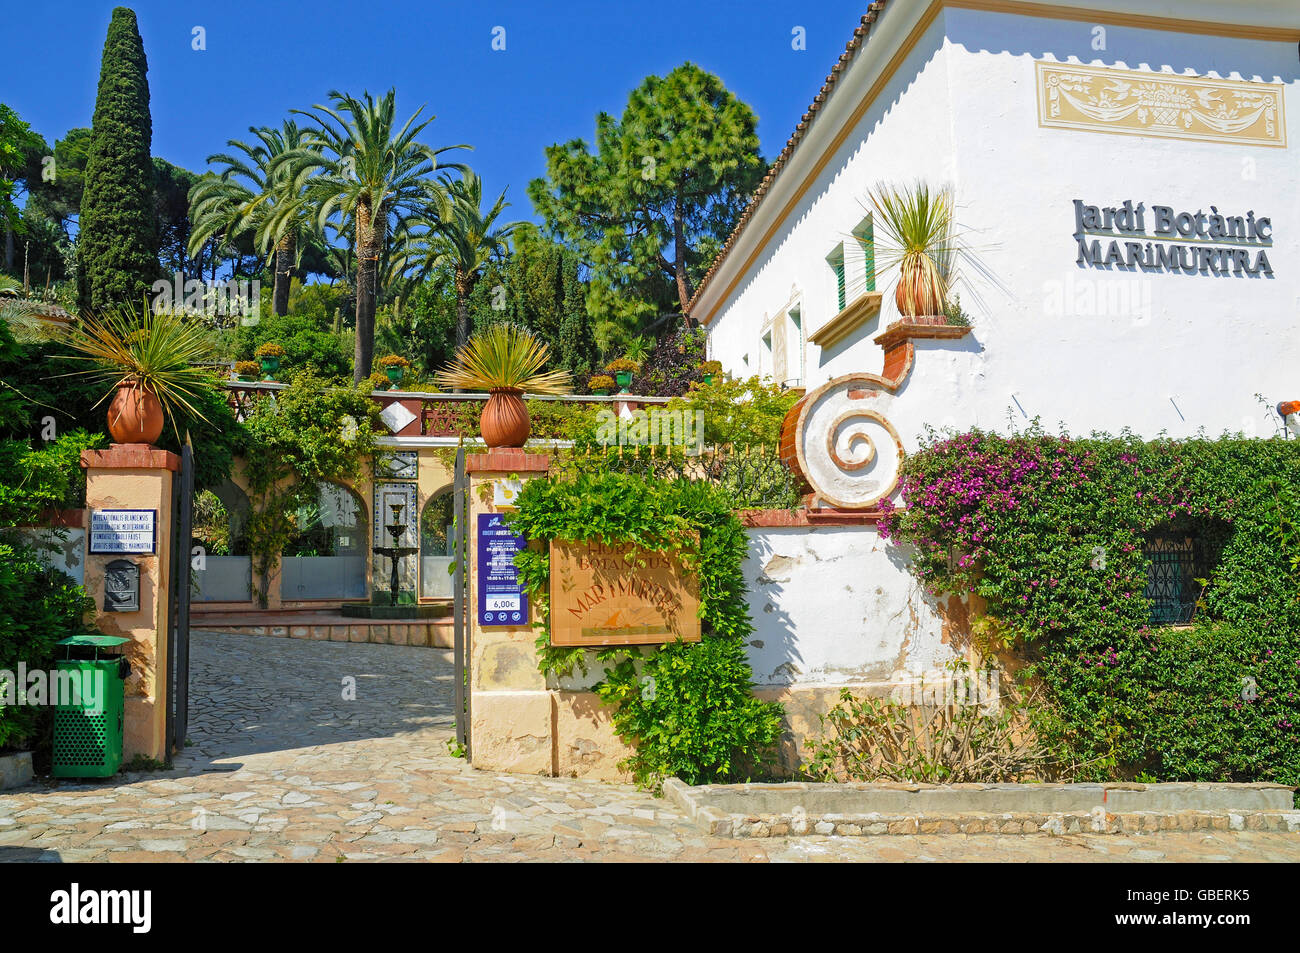 Entrance, botanic garden Marimurtra, Blanes, Catalonia, Spain / Jardi Botanic Mar i Murtra Stock Photo